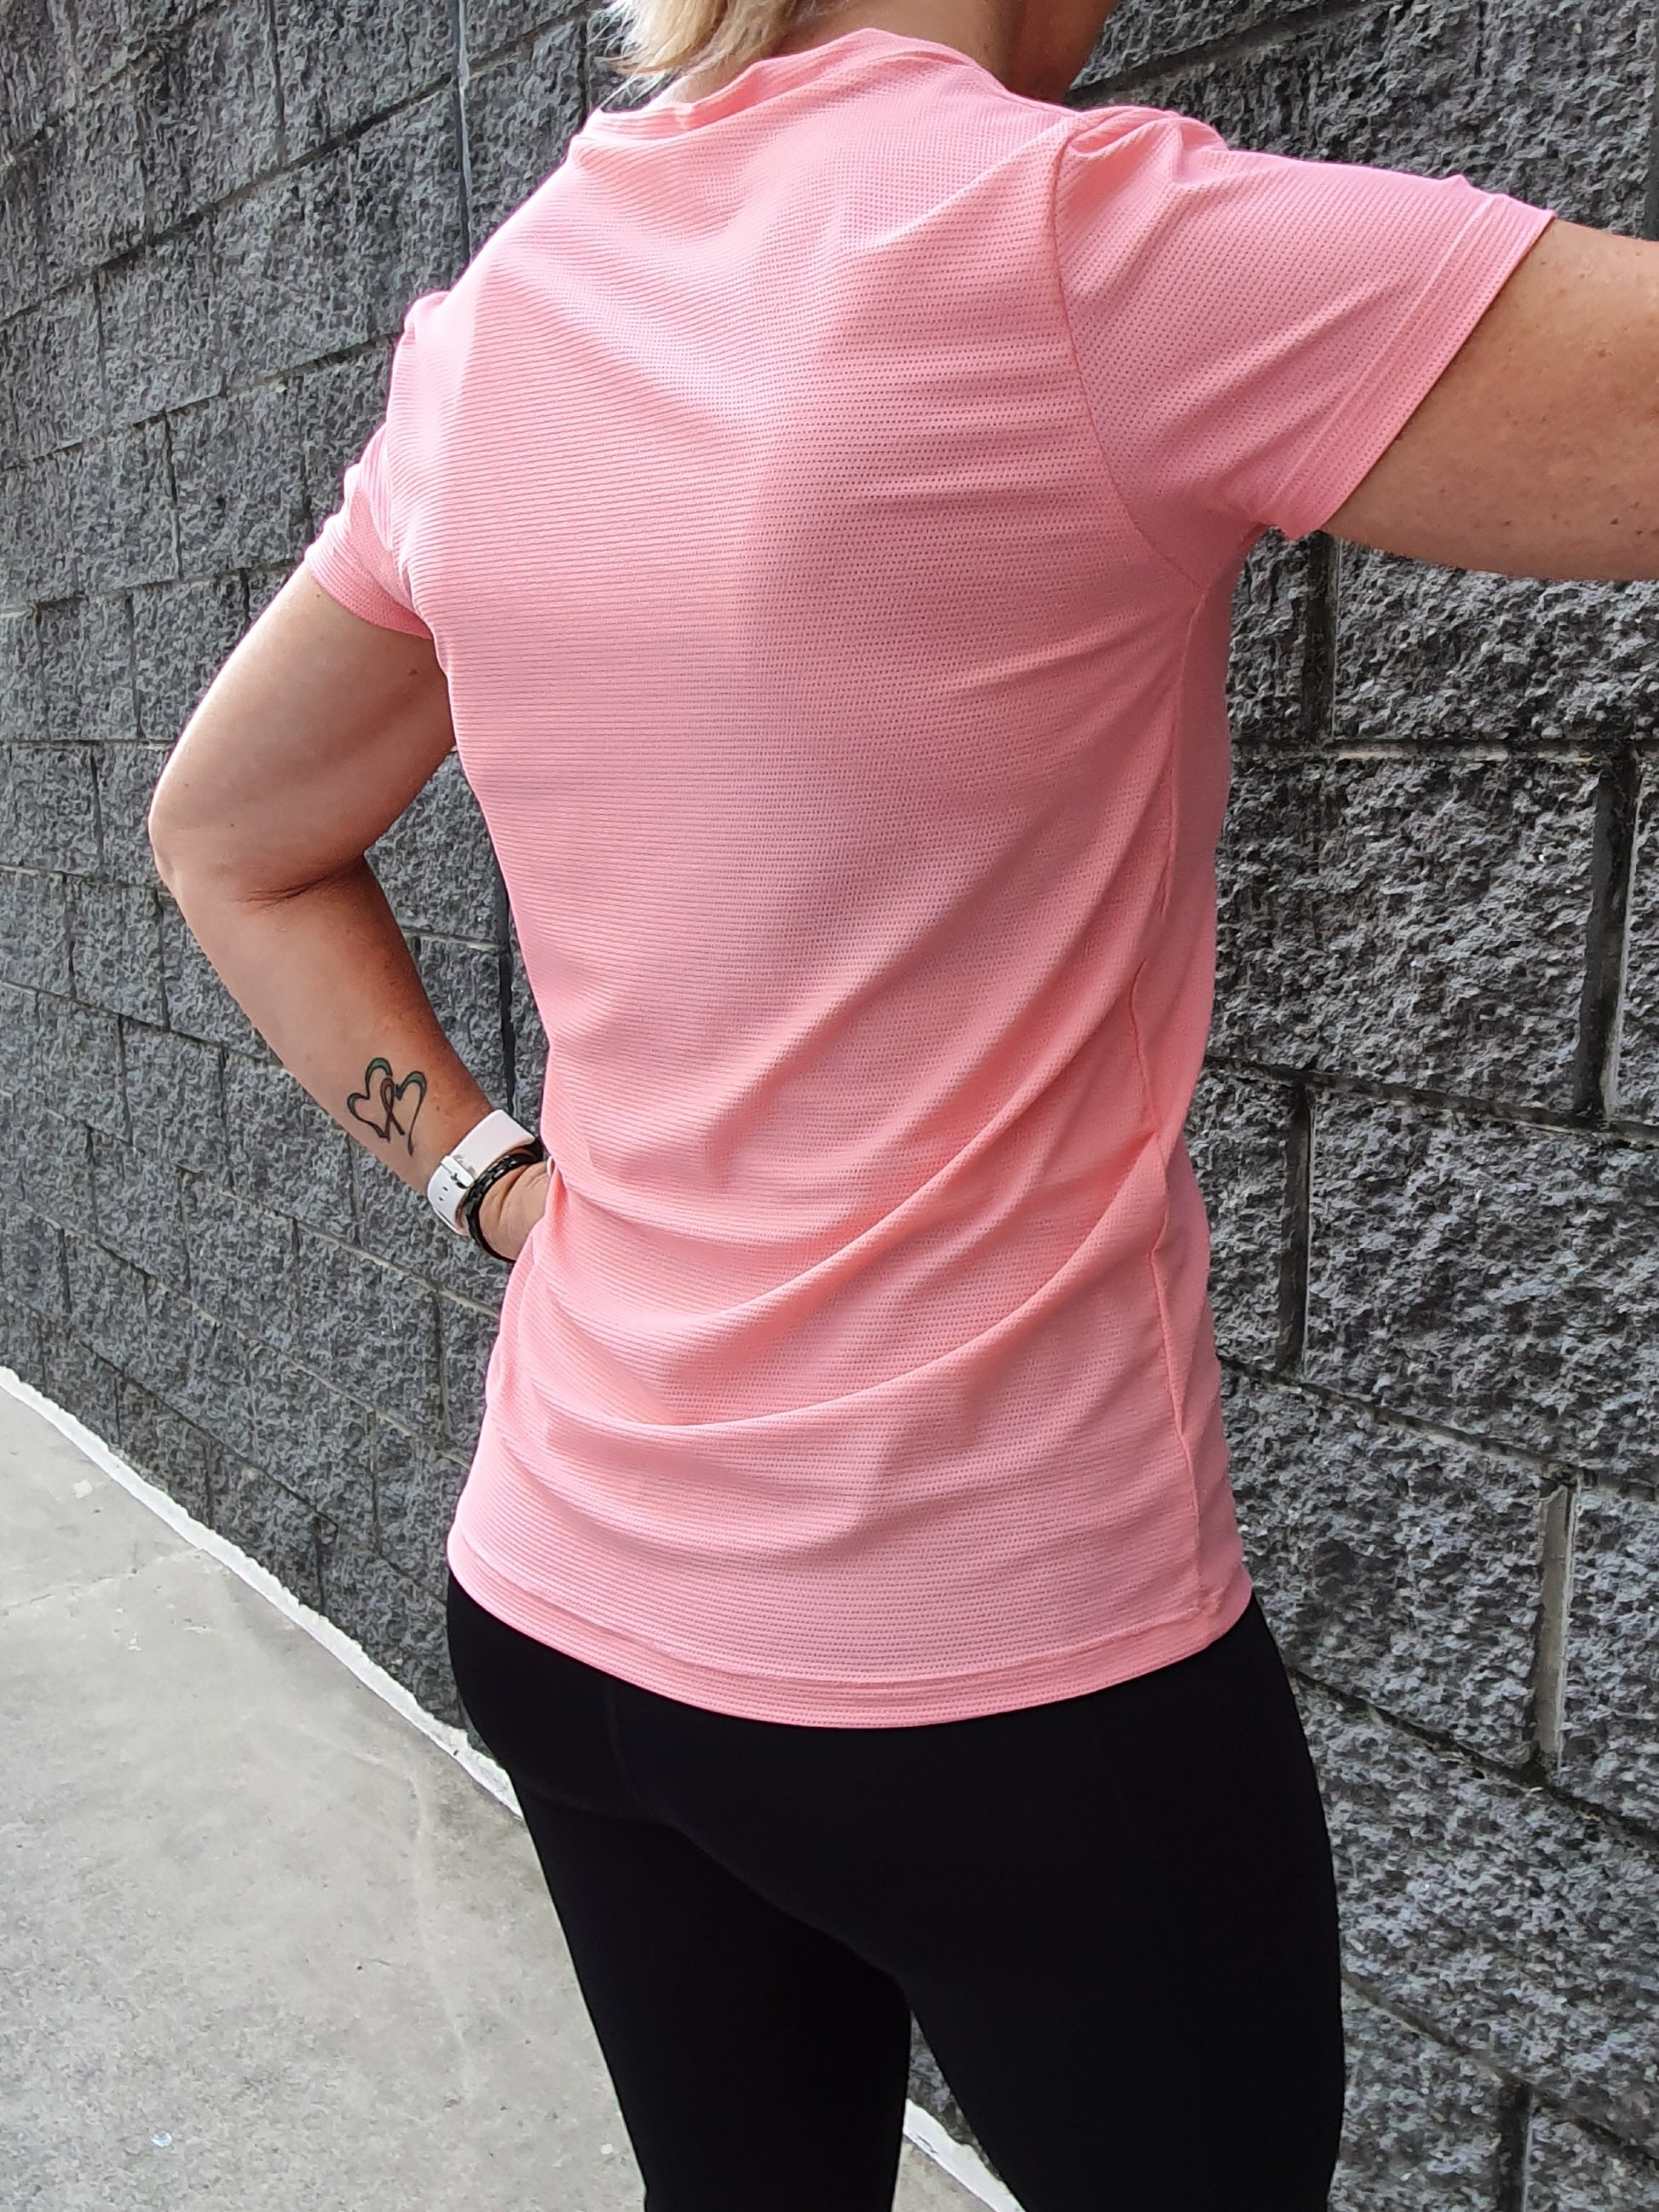 Gmaxx 'SCULPT' MESH T-Shirts, Blue and Candy Pink - XS to 3XL